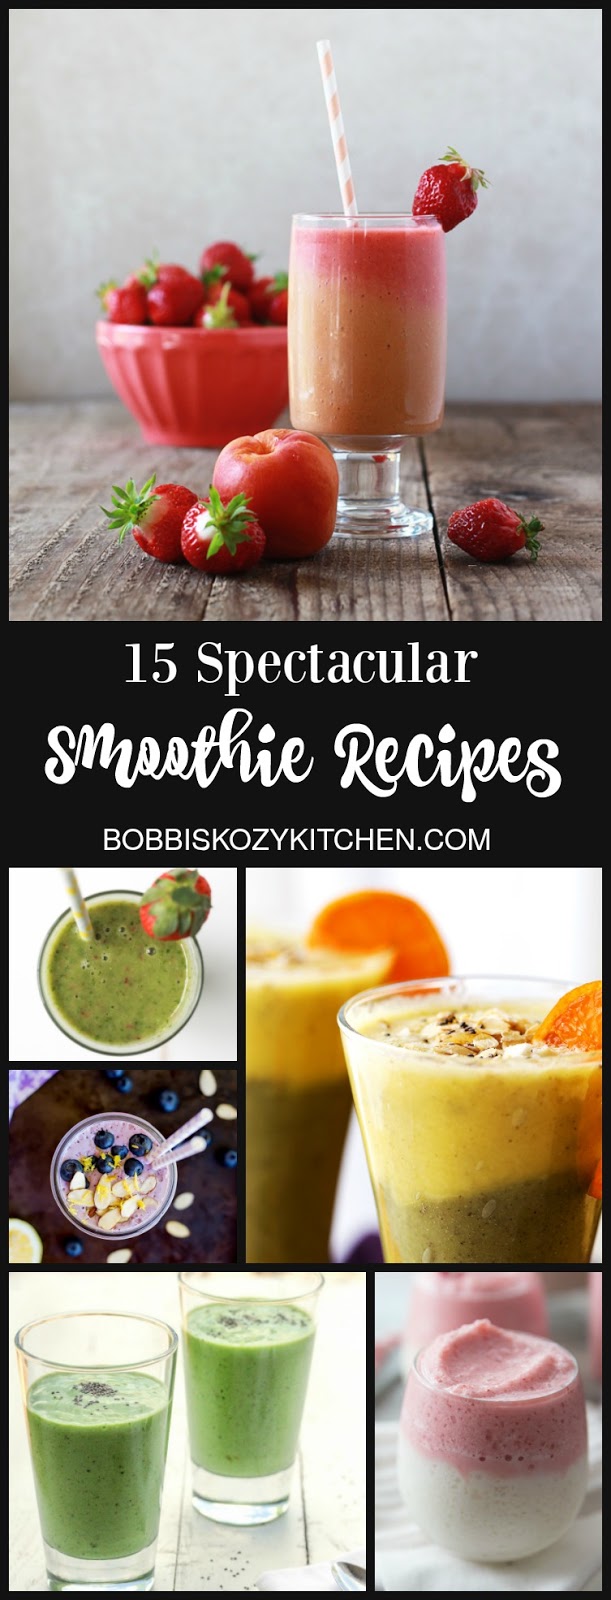 15 Spectacular Smoothie Recipes from www.bobbiskozykitchen.com